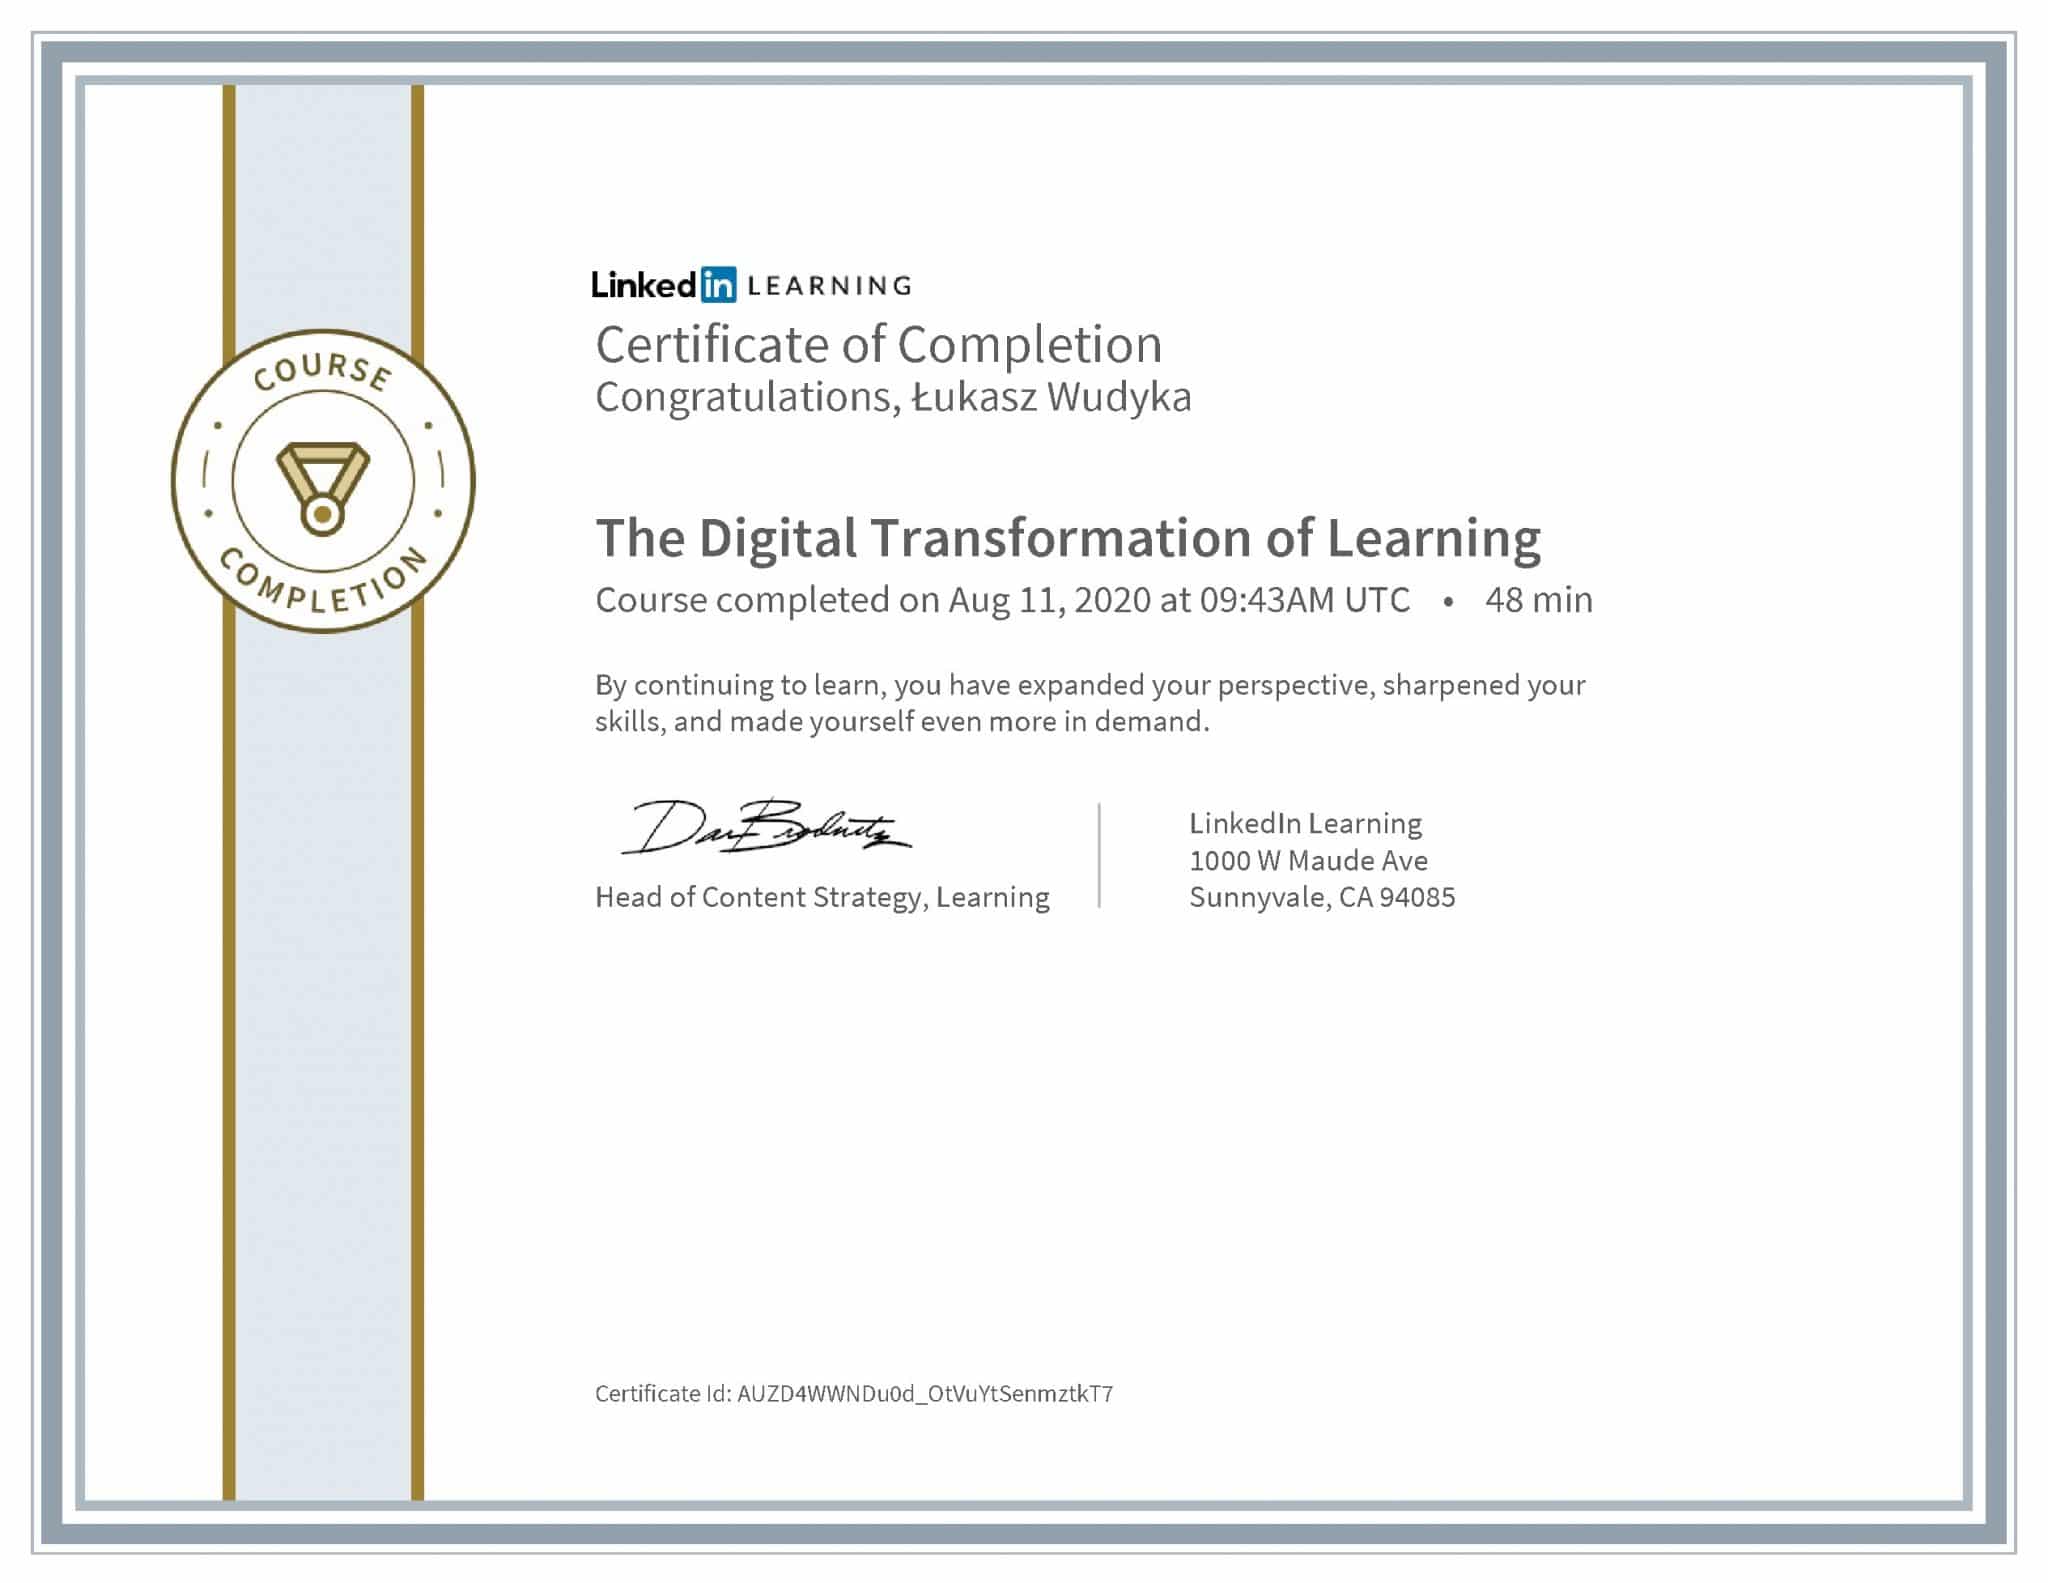 Łukasz Wudyka certyfikat LinkedIn The Digital Transformation of Learning